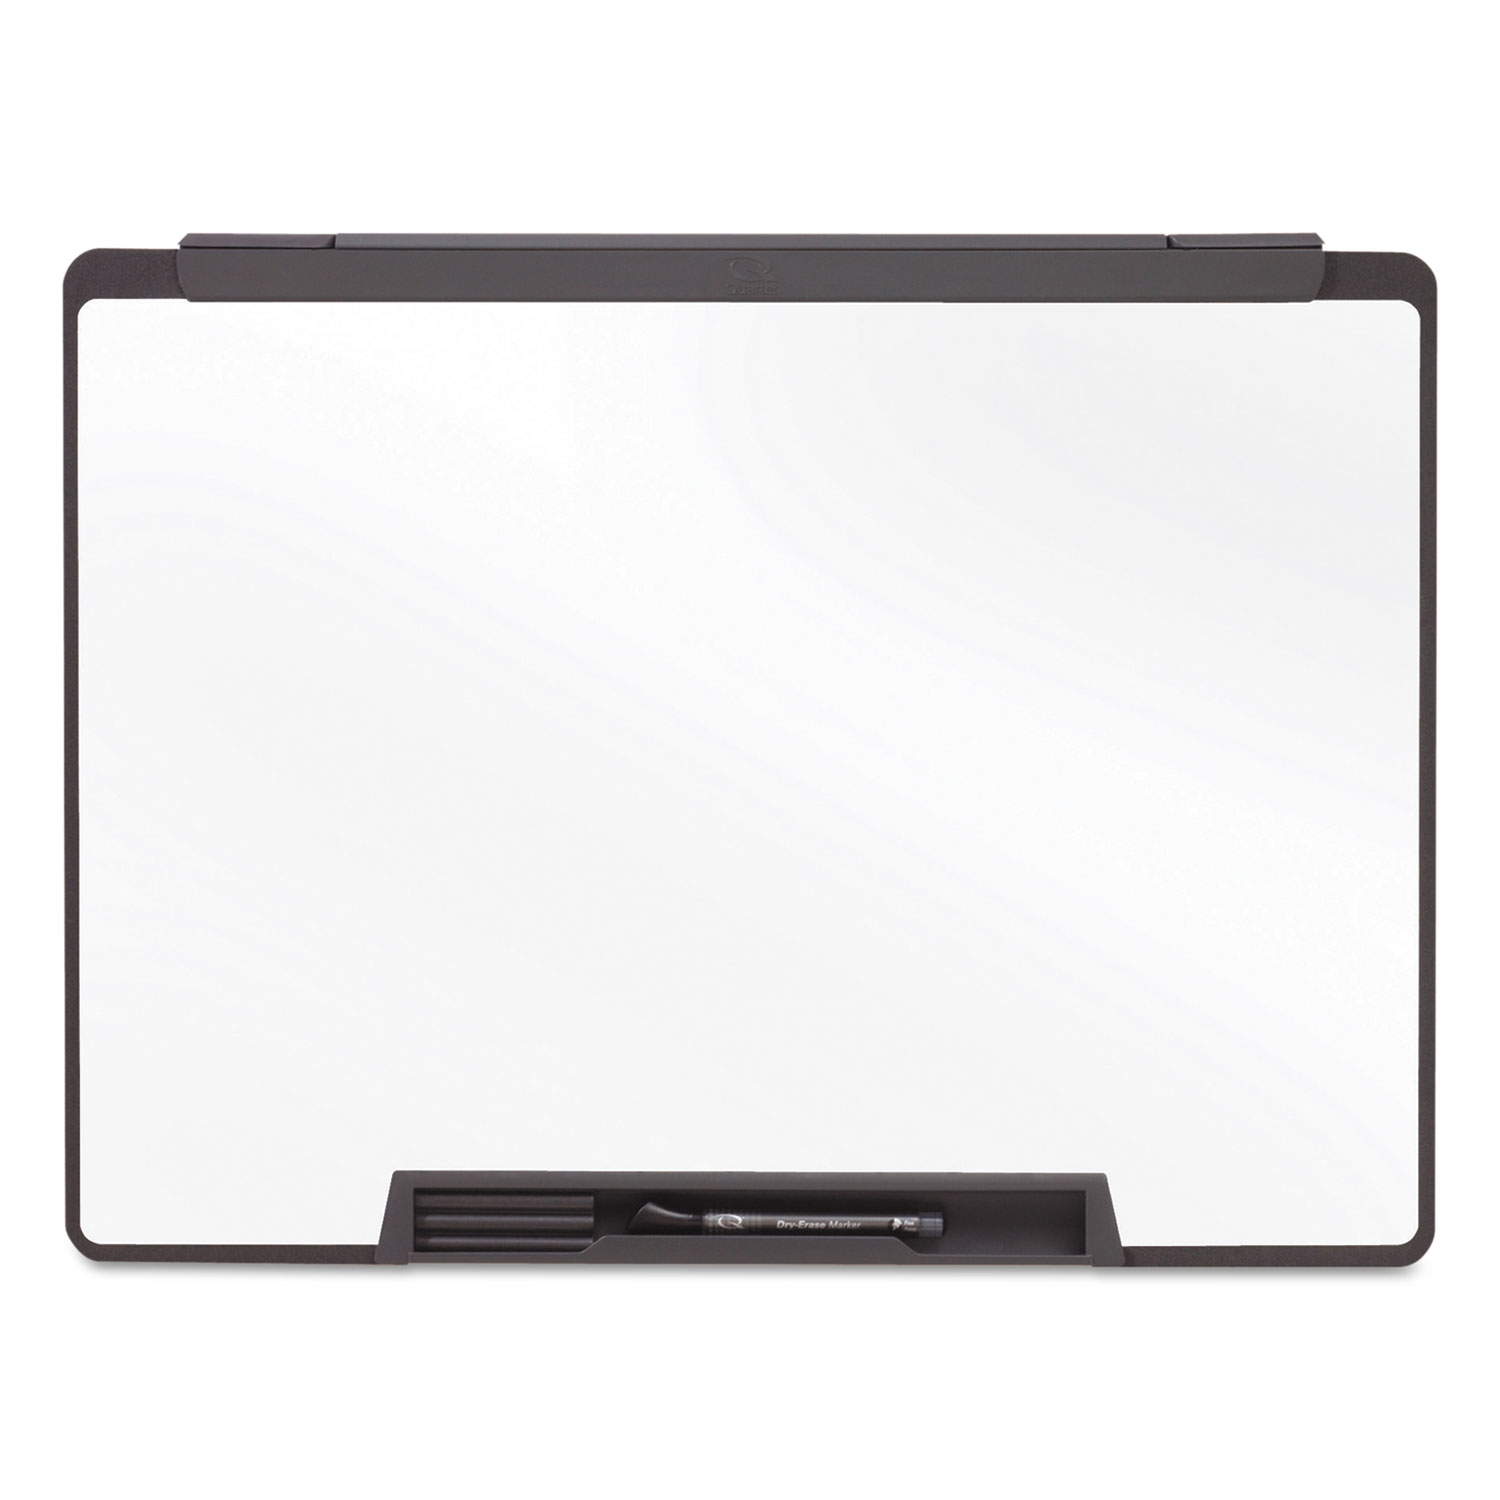  Quartet MMP25 Motion Portable Dry Erase Board, 24 x 18, White, Black Frame (QRTMMP25) 